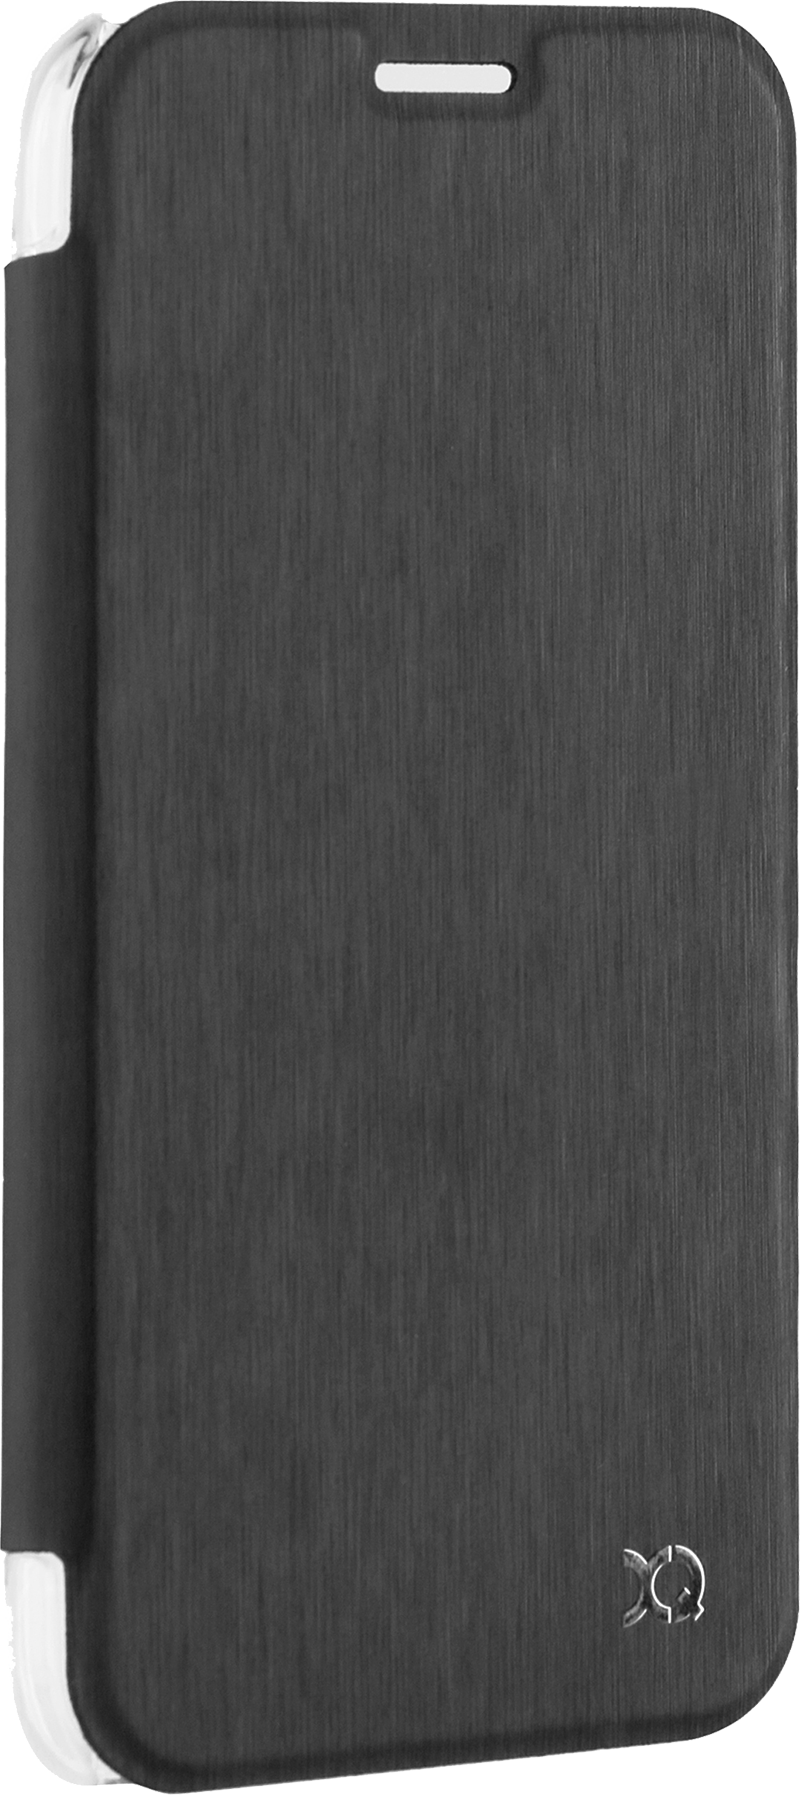 Etui folio Xqisit Galaxy J3 2017 noir